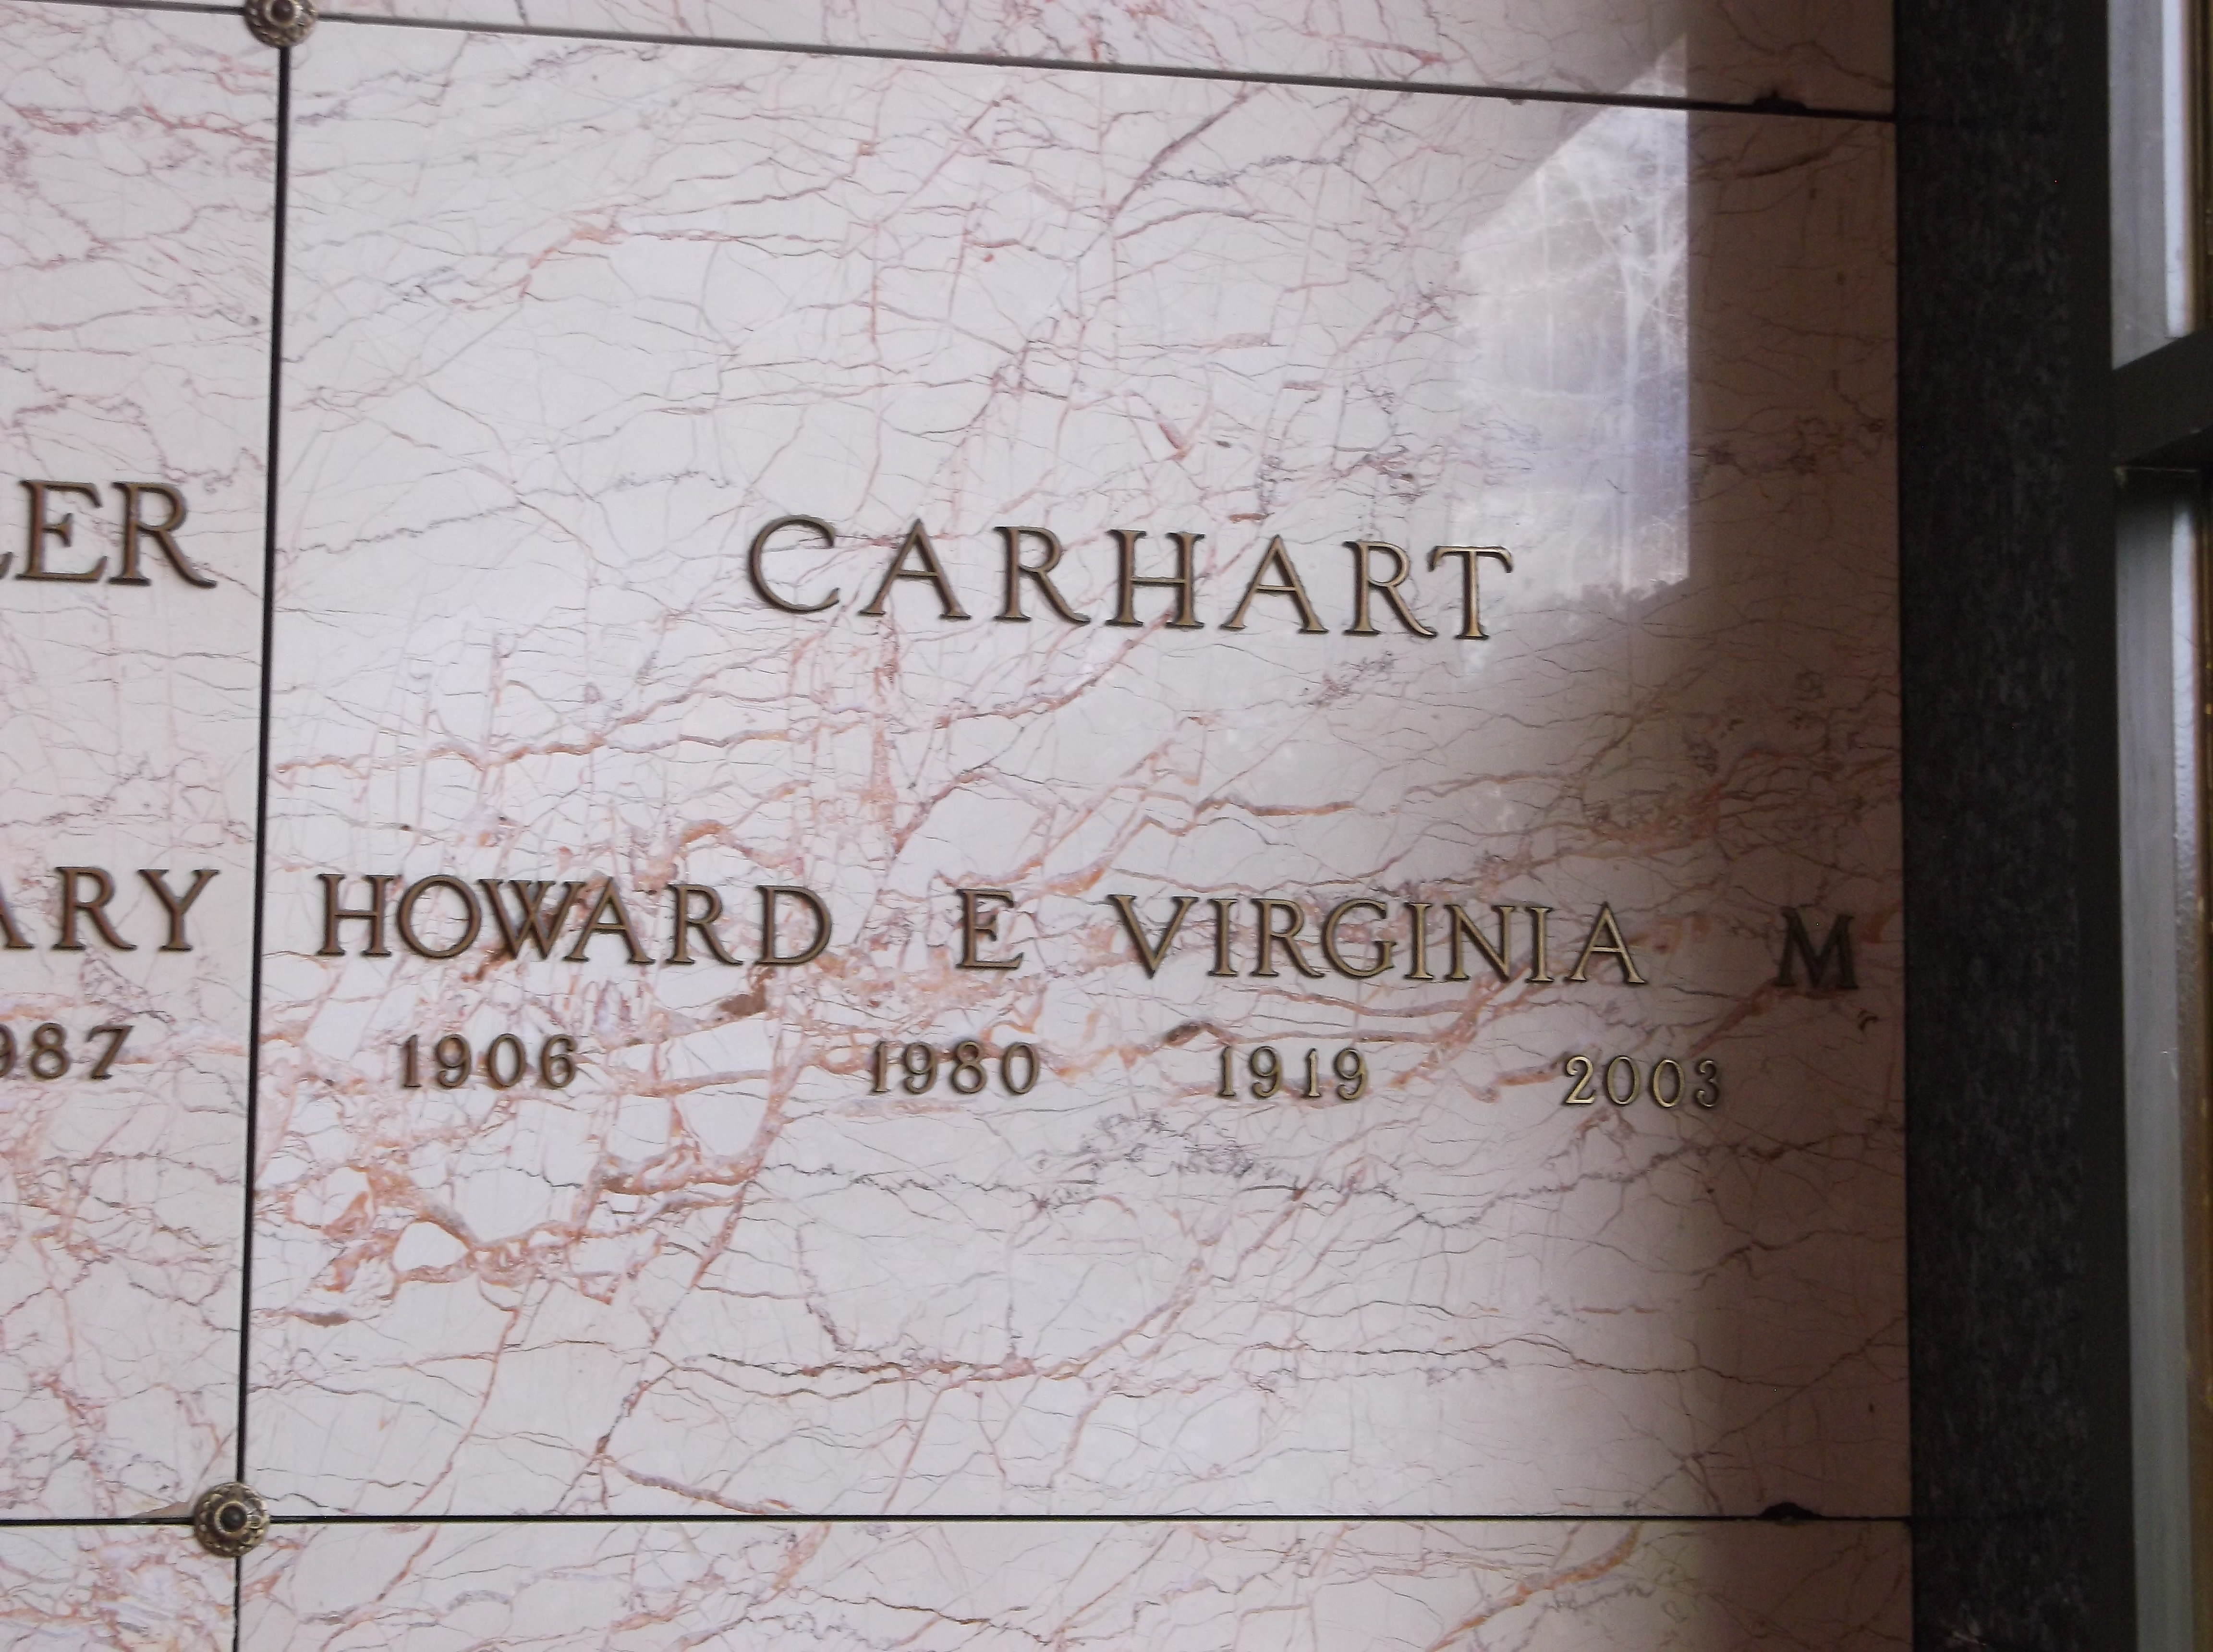 Howard E Carhart